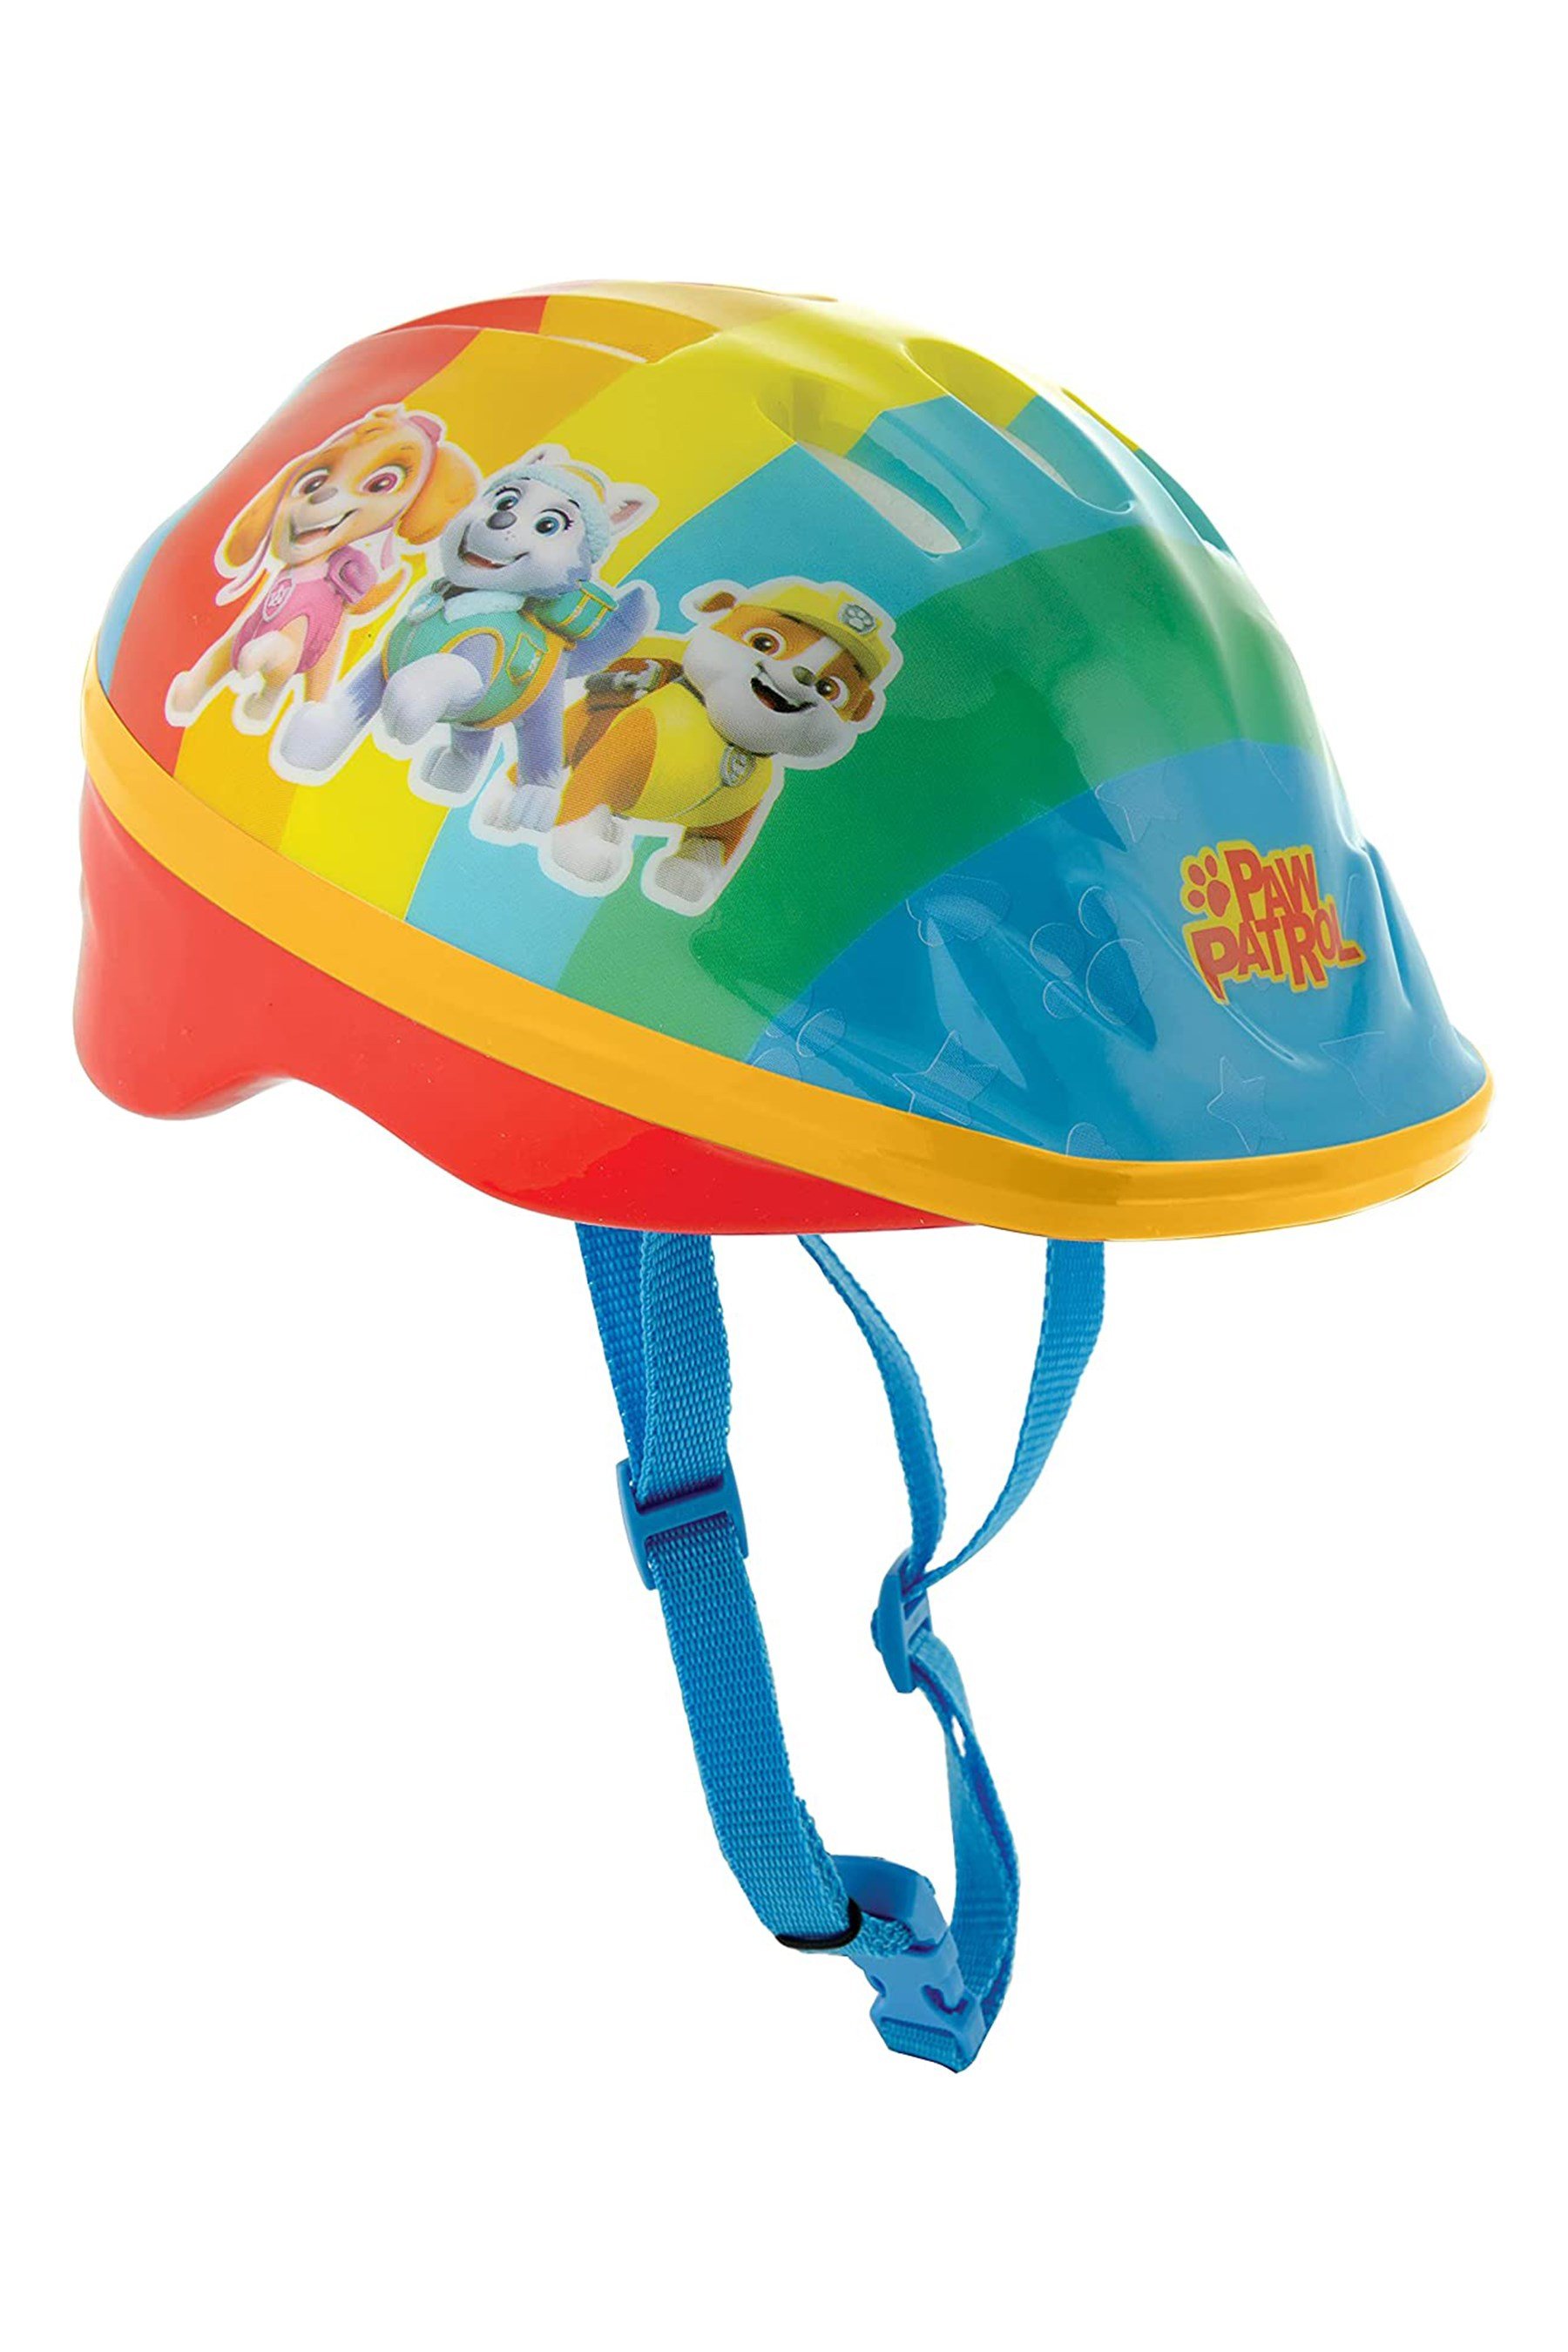 Paw Patrol Kids Safety Cycling Helmet 48-52cm -